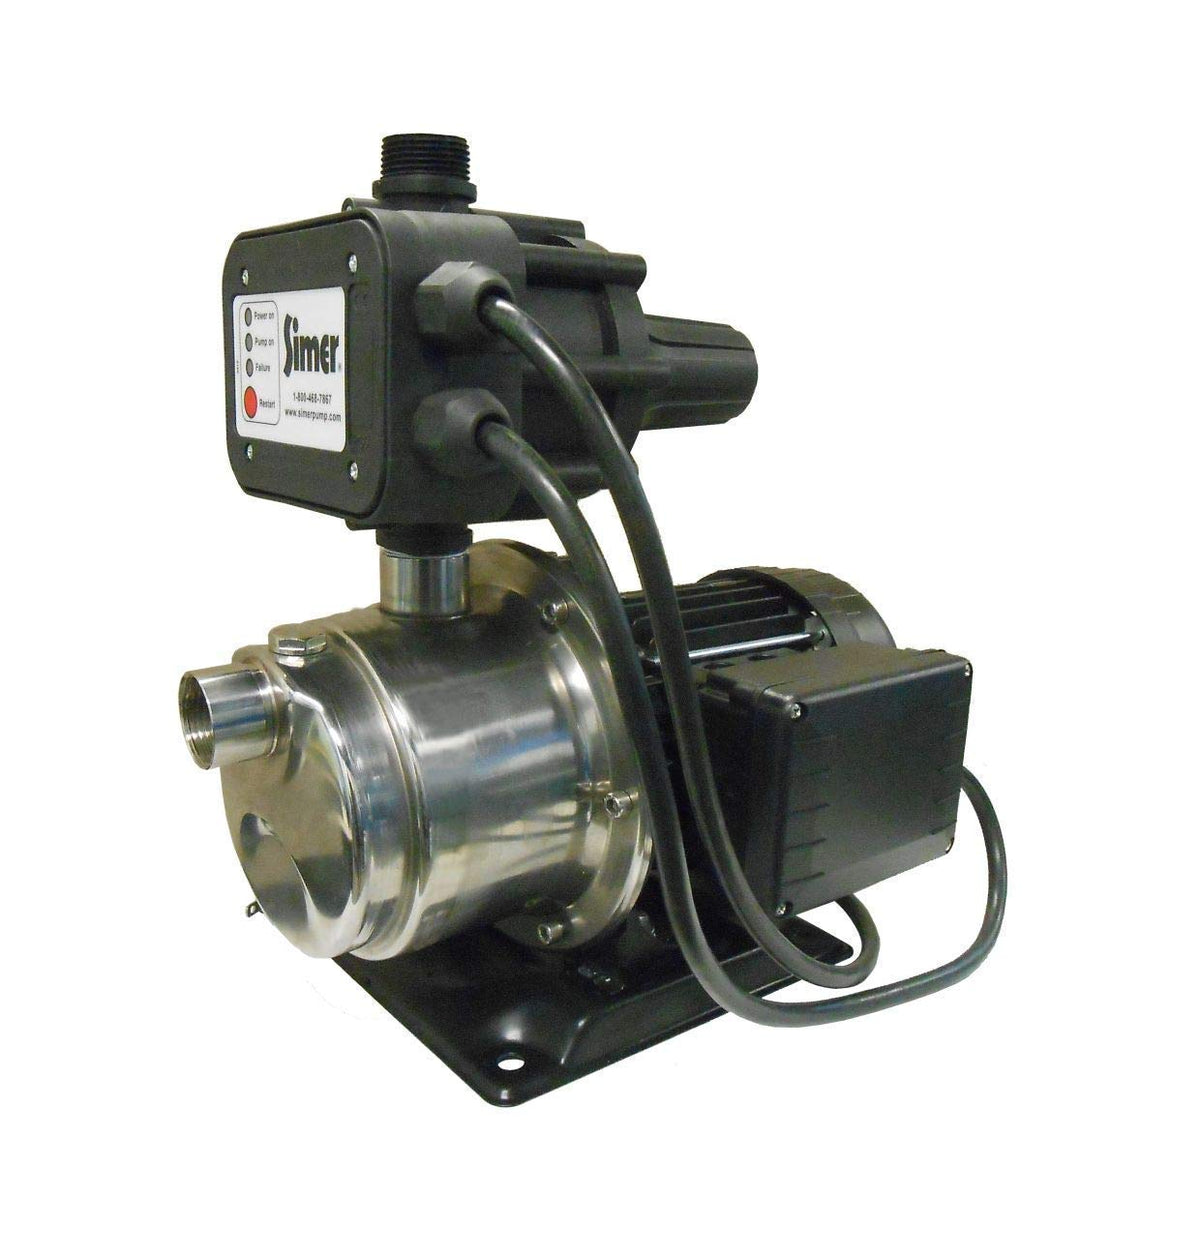 Simer 4075SS-01 Stainless Steel Pressure Water Booster Pump, 3/4 HP